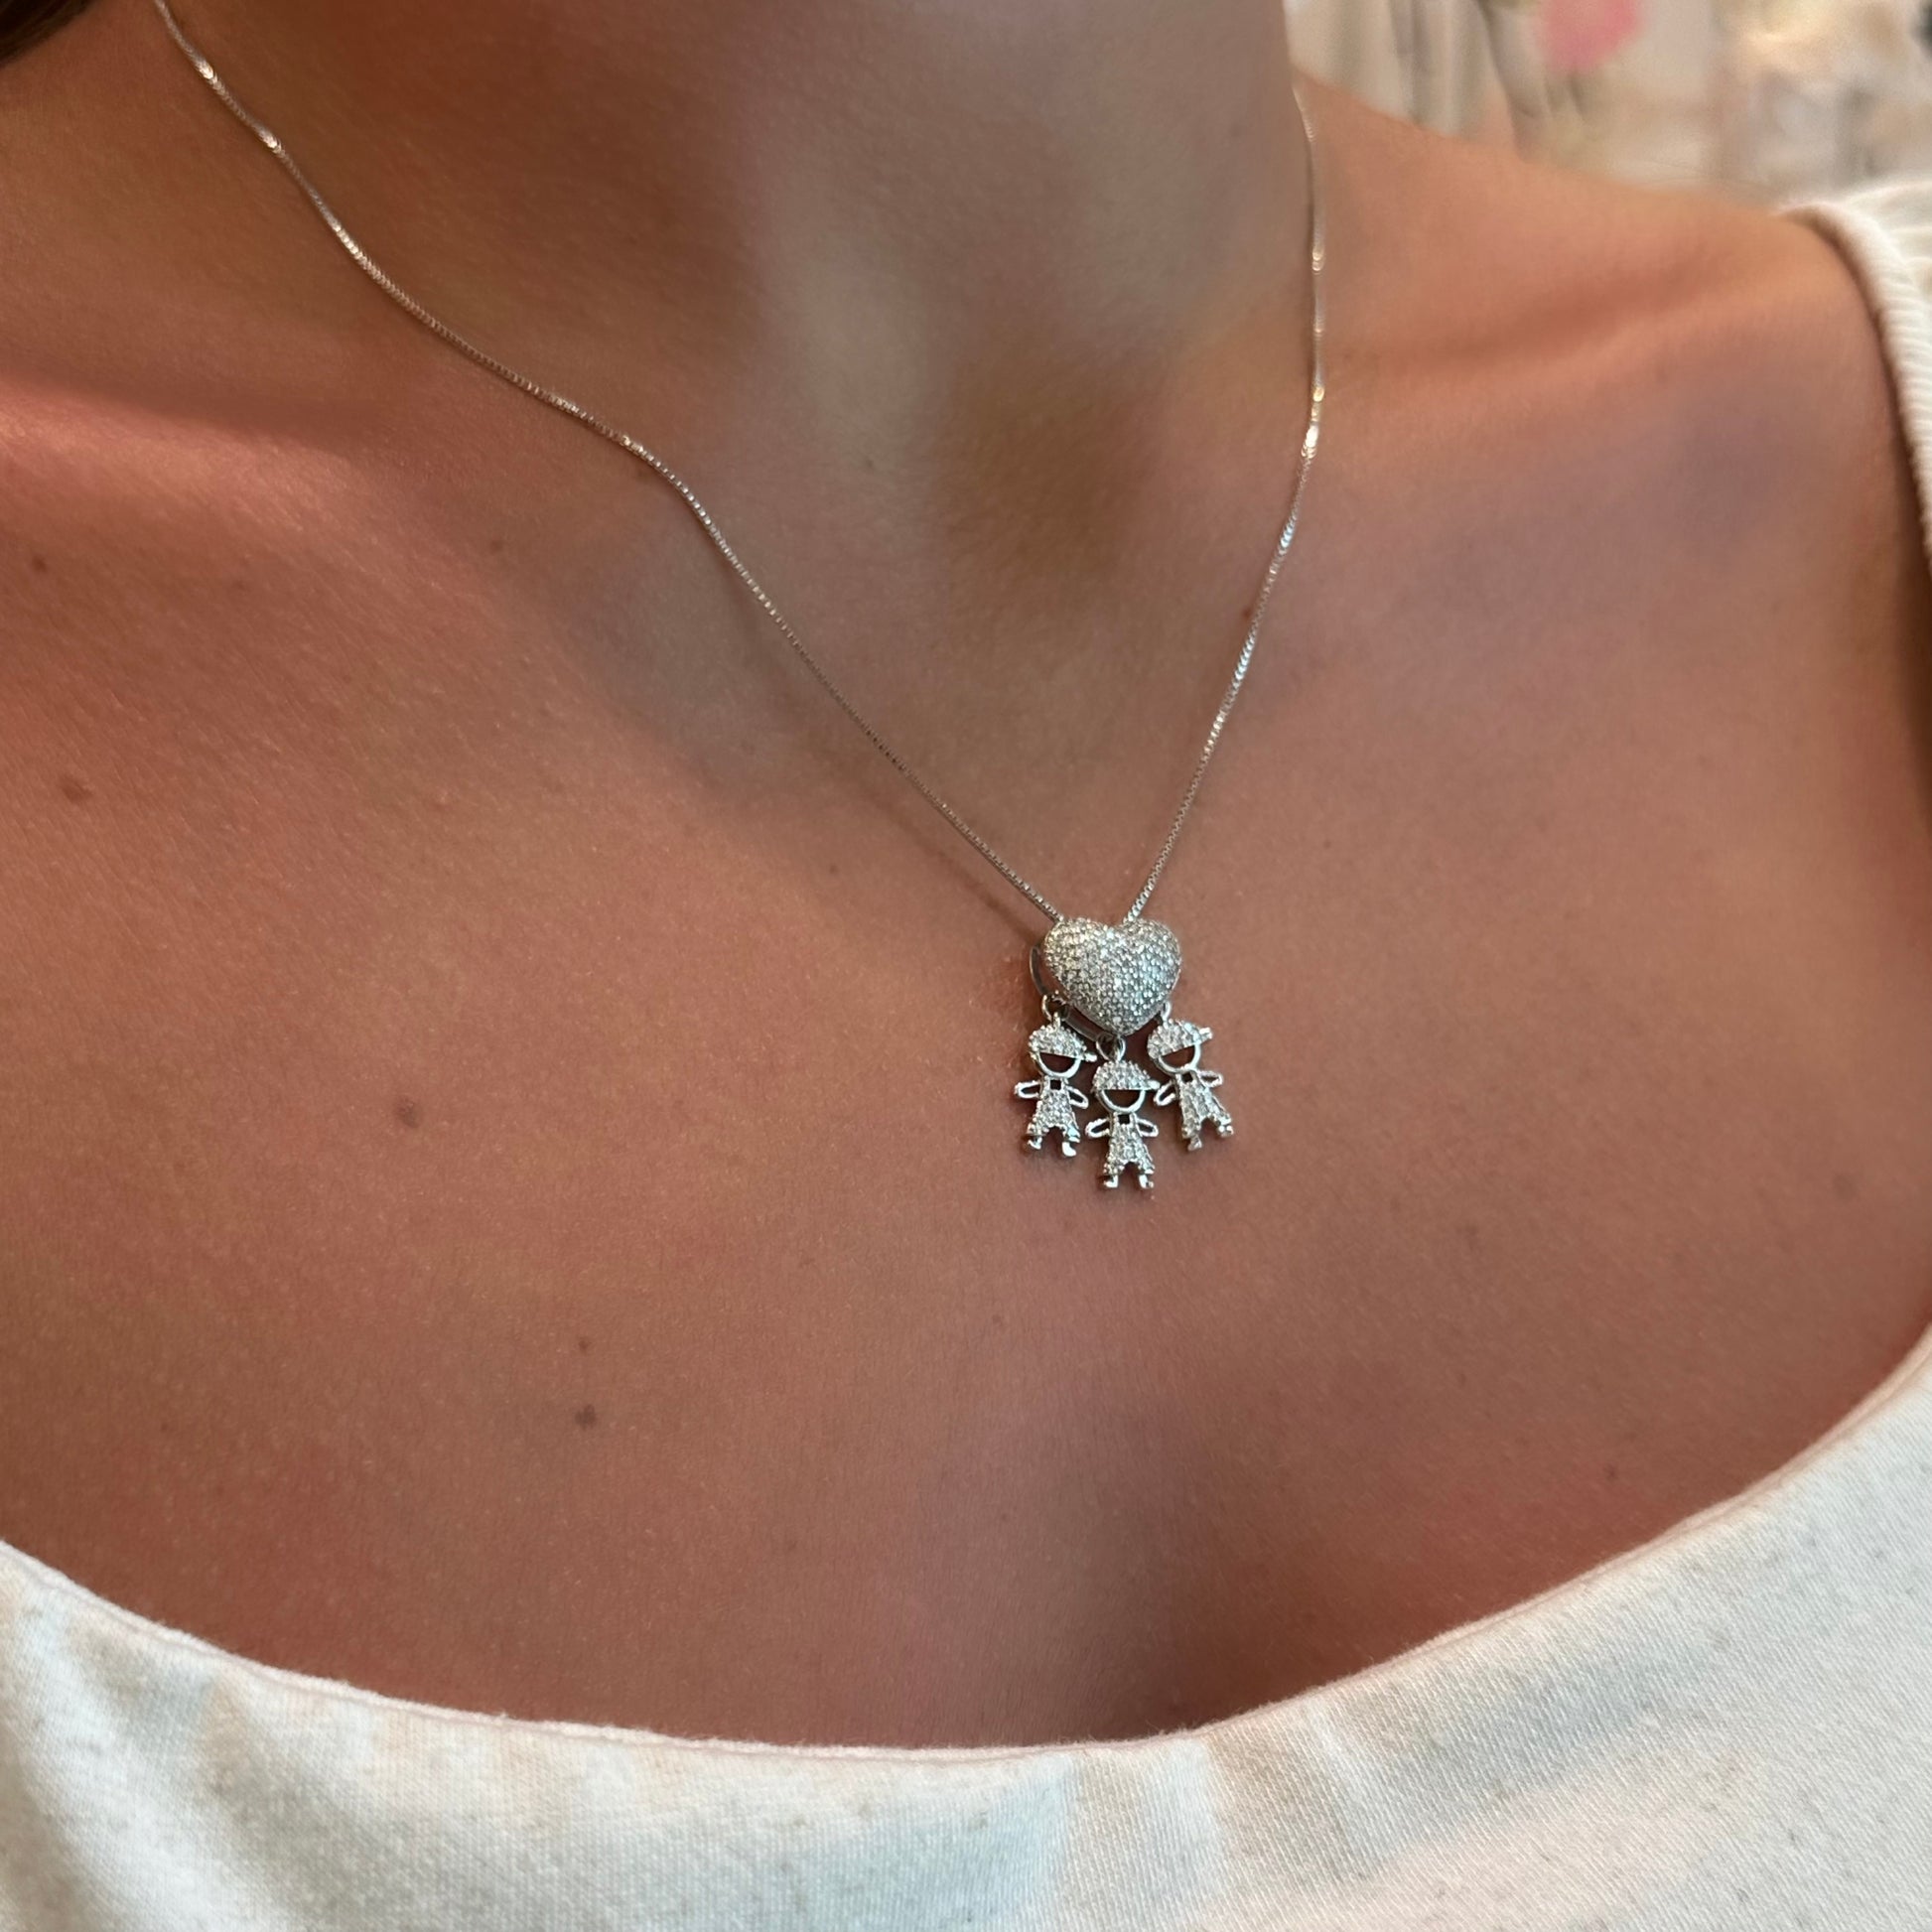 Piaget Sunlight necklace